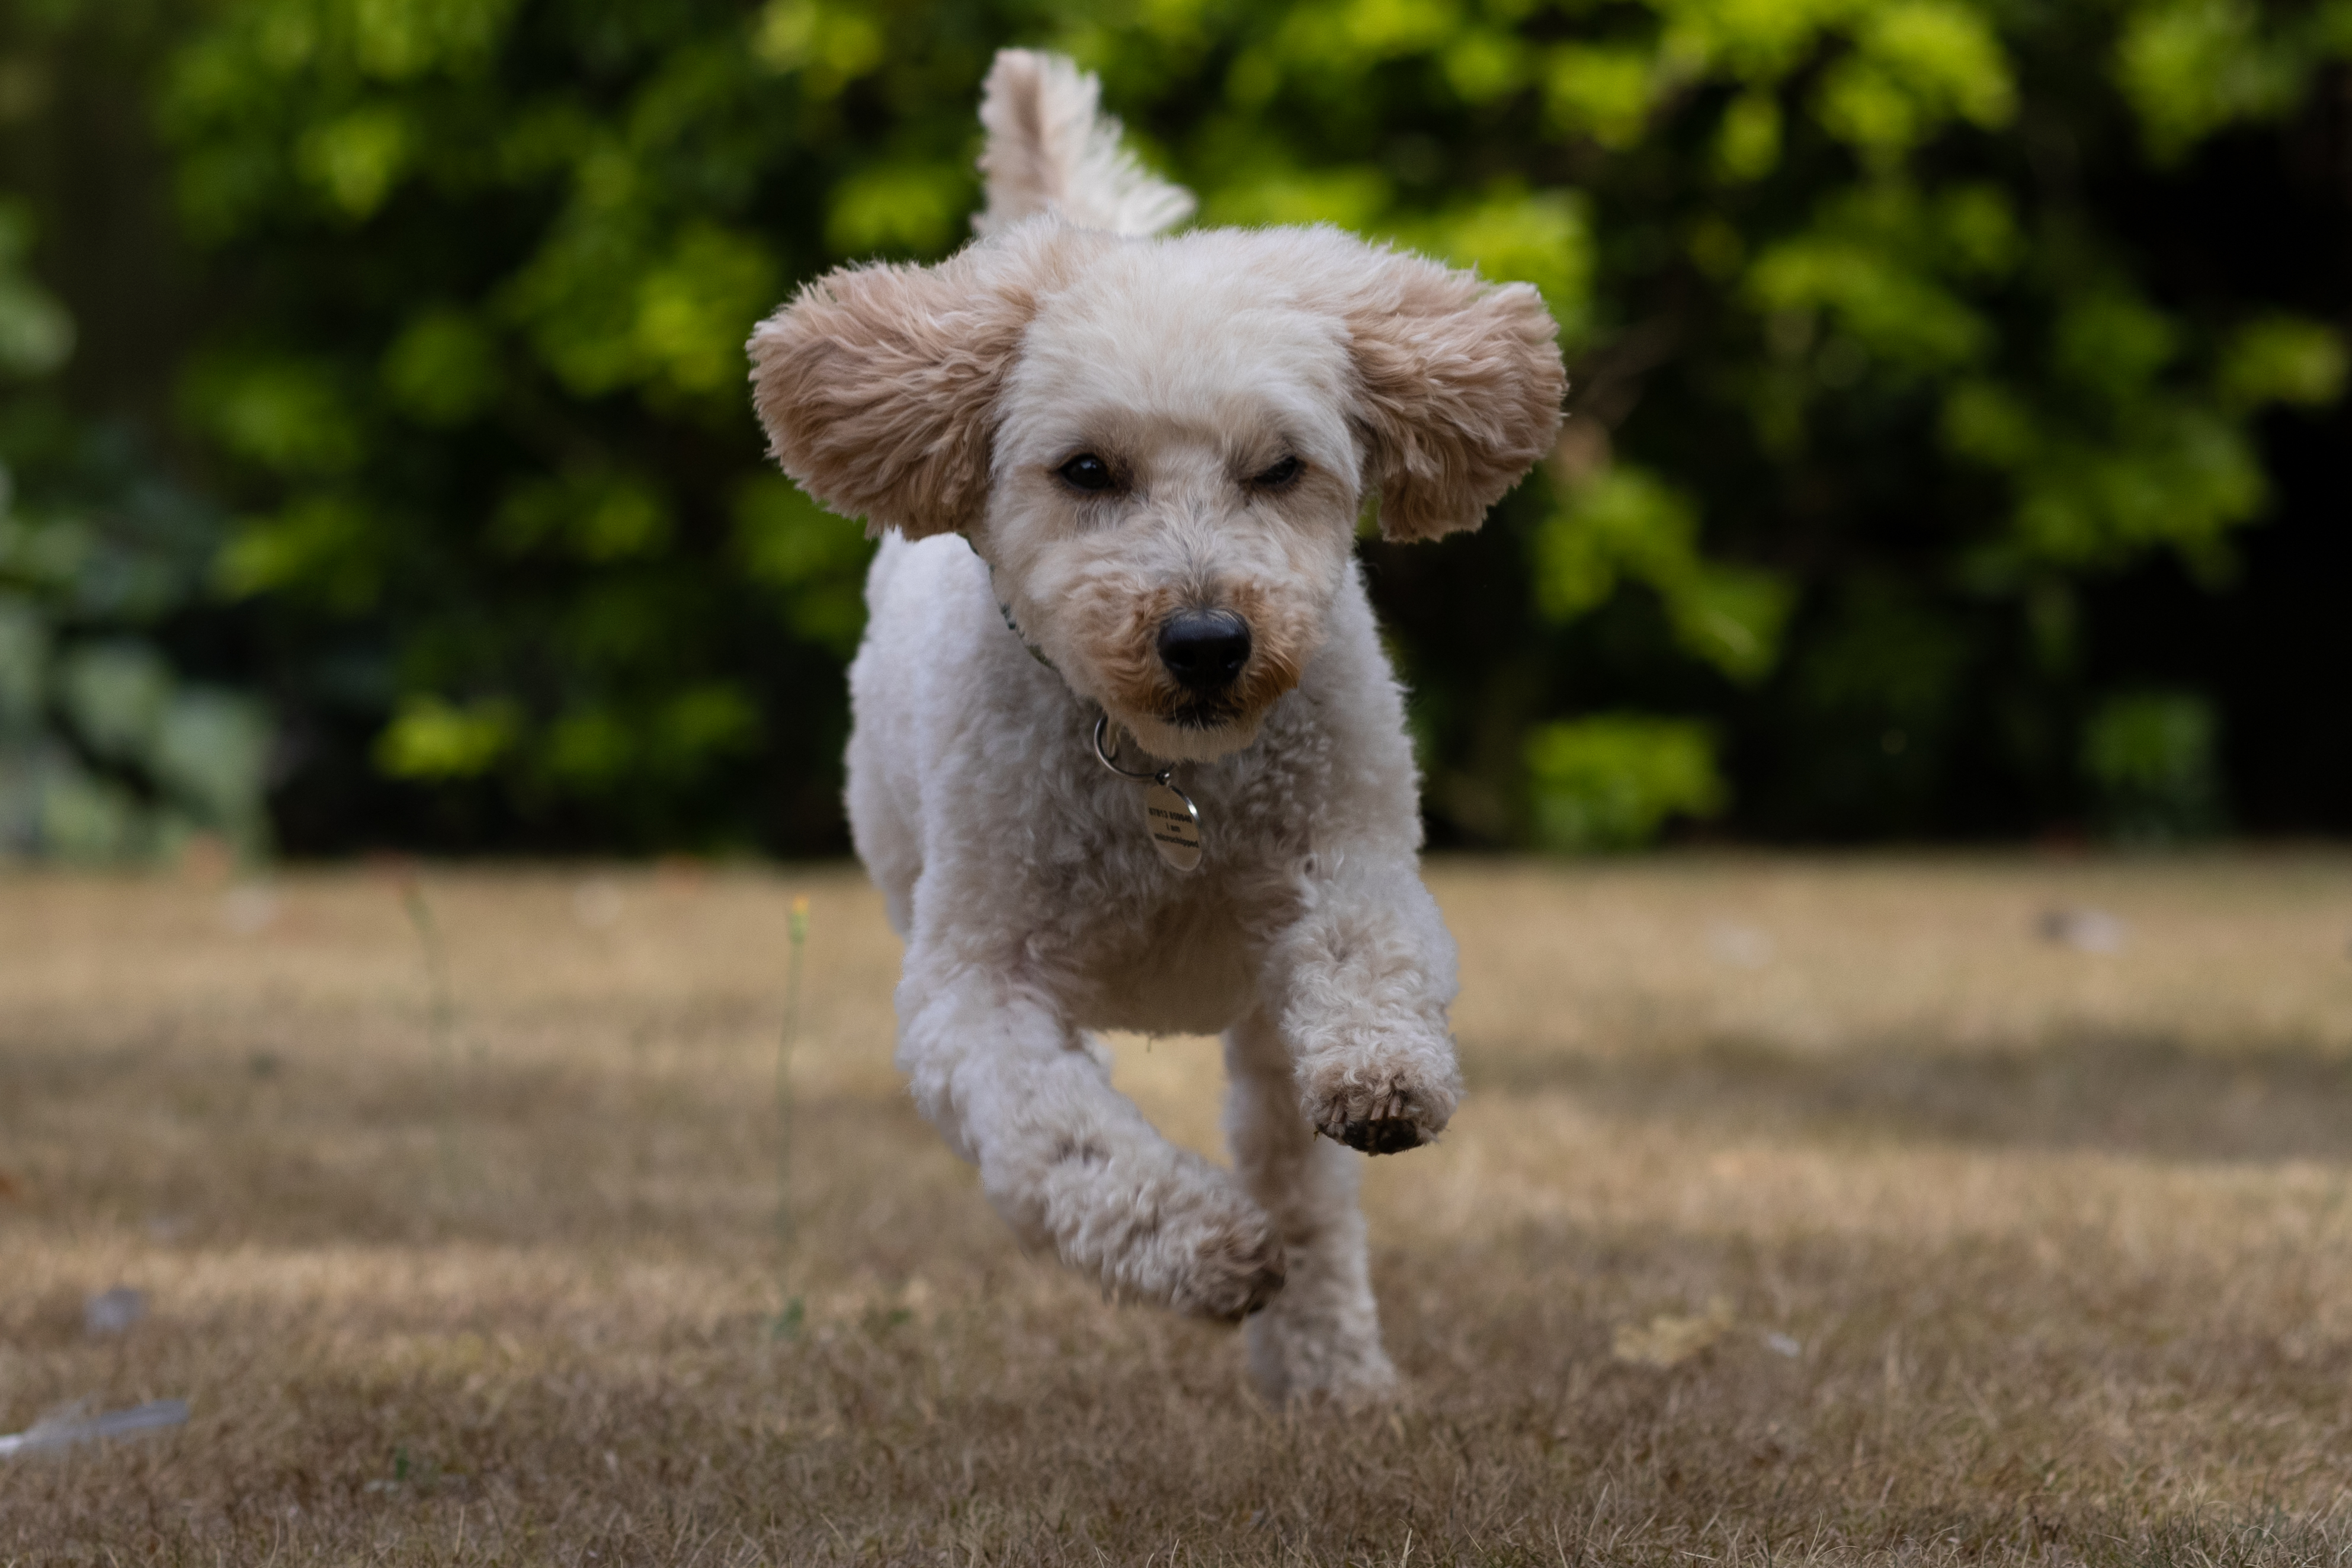 A running cockapoo dog in a garden